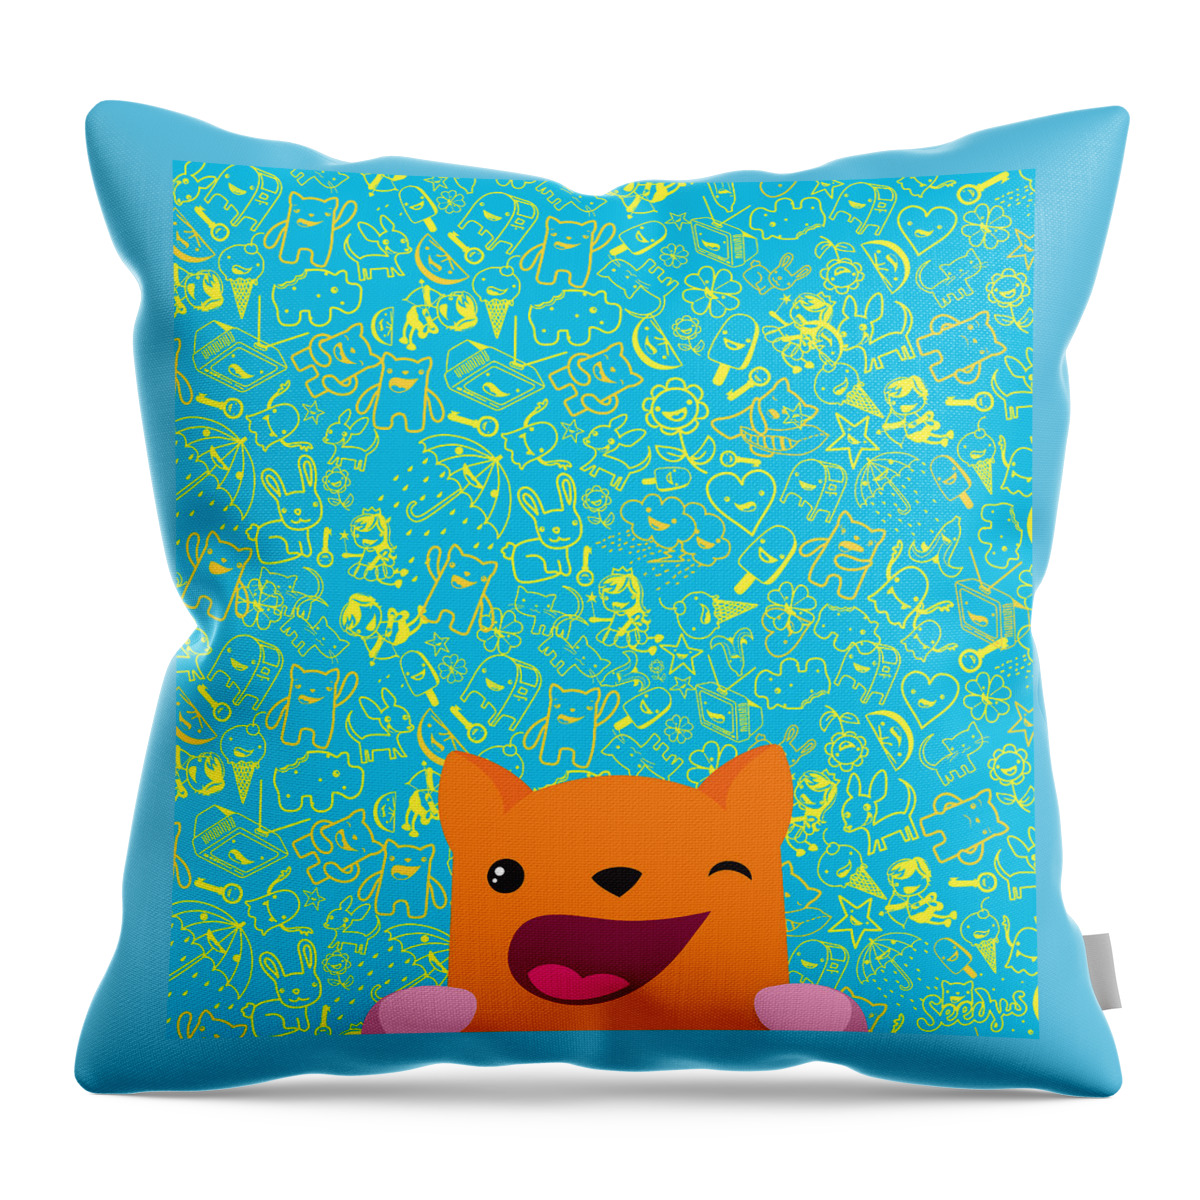 Good Luck Throw Pillow featuring the digital art Good luck by Seedys 